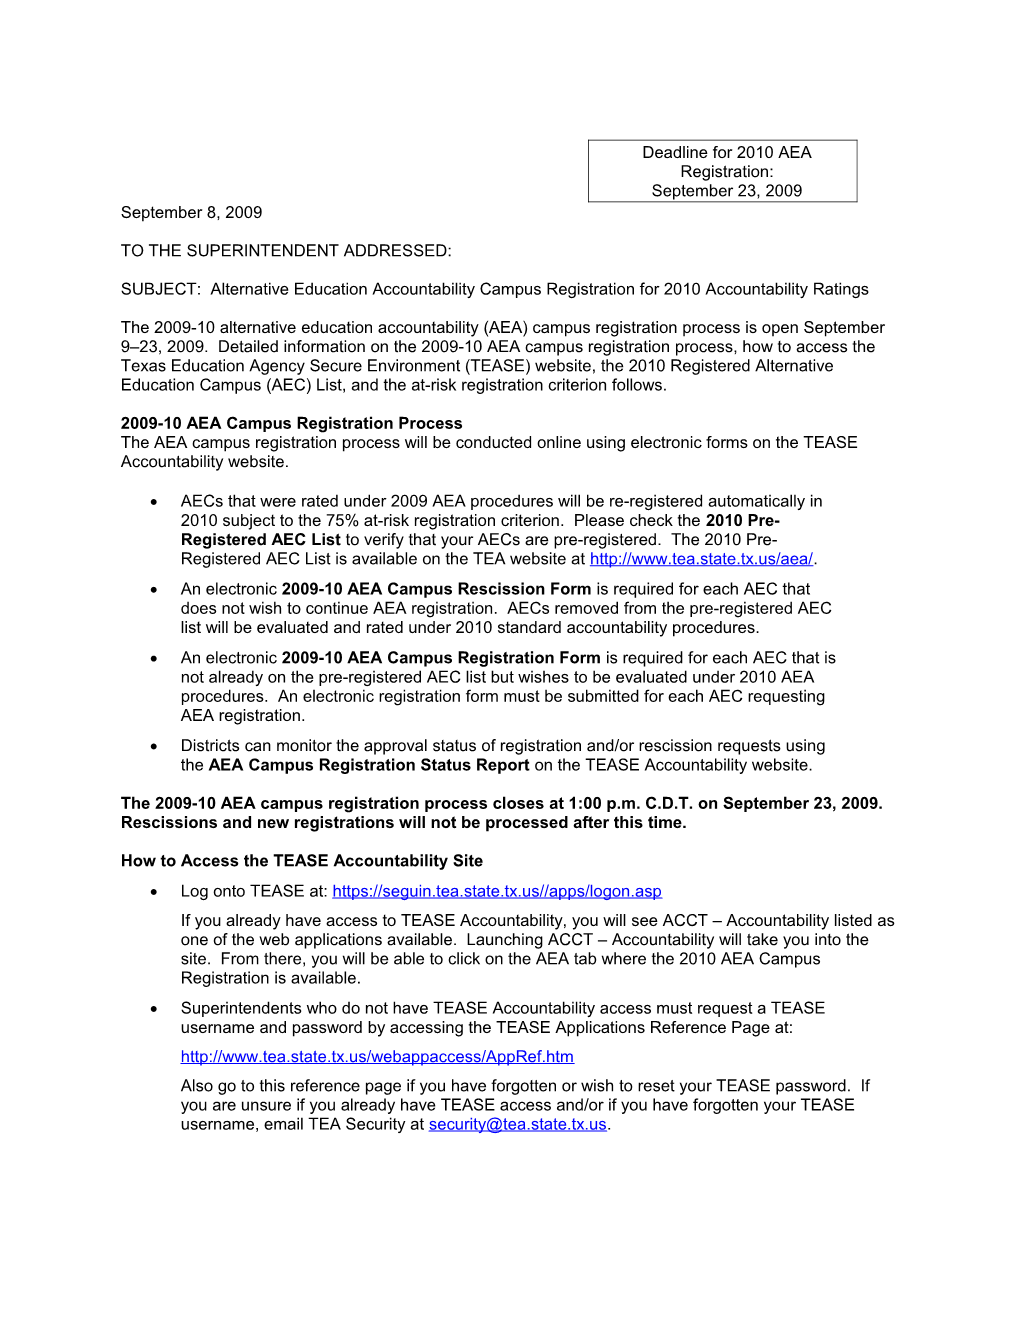 SUBJECT: Alternative Education Accountability Campus Registration for 2010 Accountability